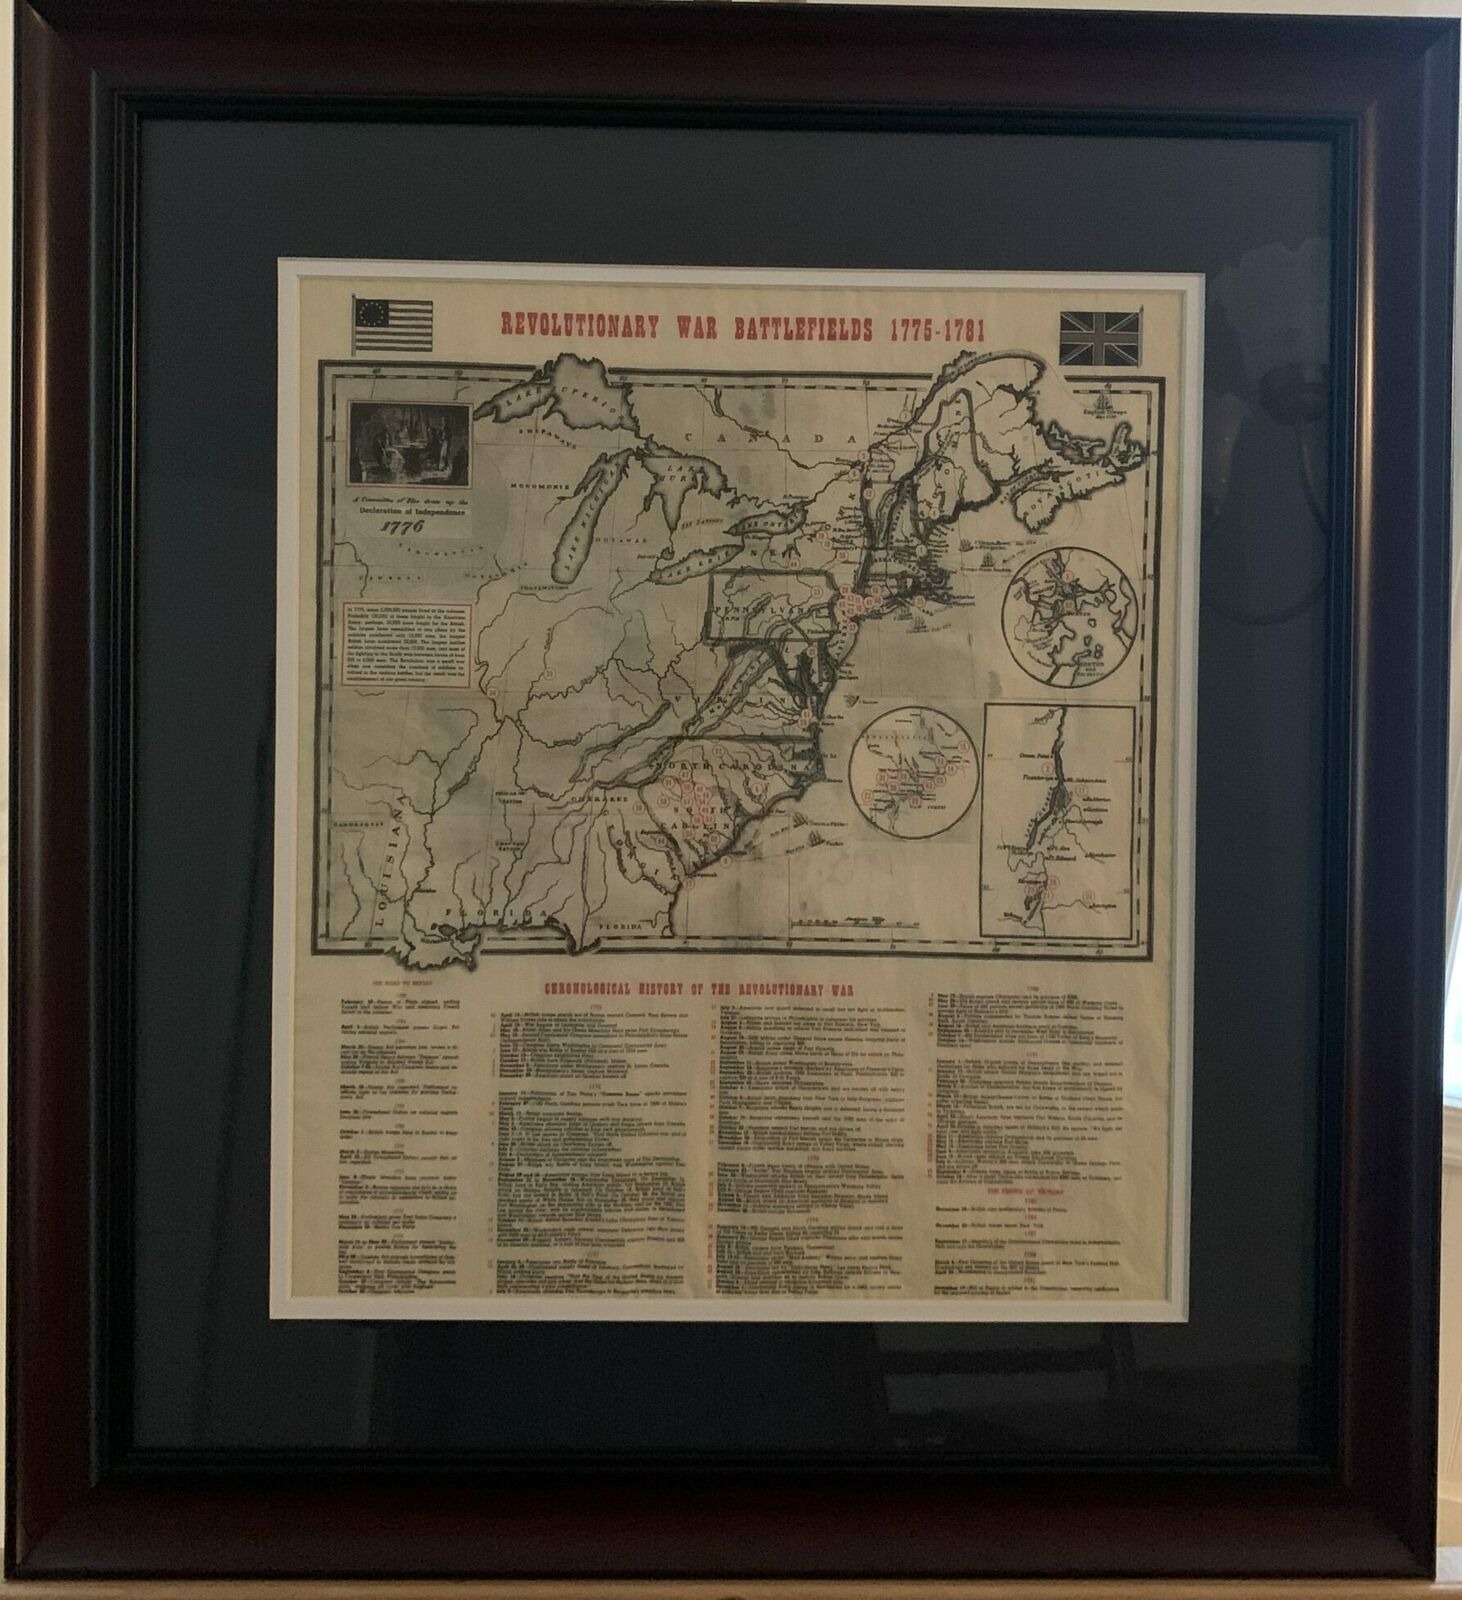 Chronological Map of Revolutionary War Battlefields in an Elegant Frame